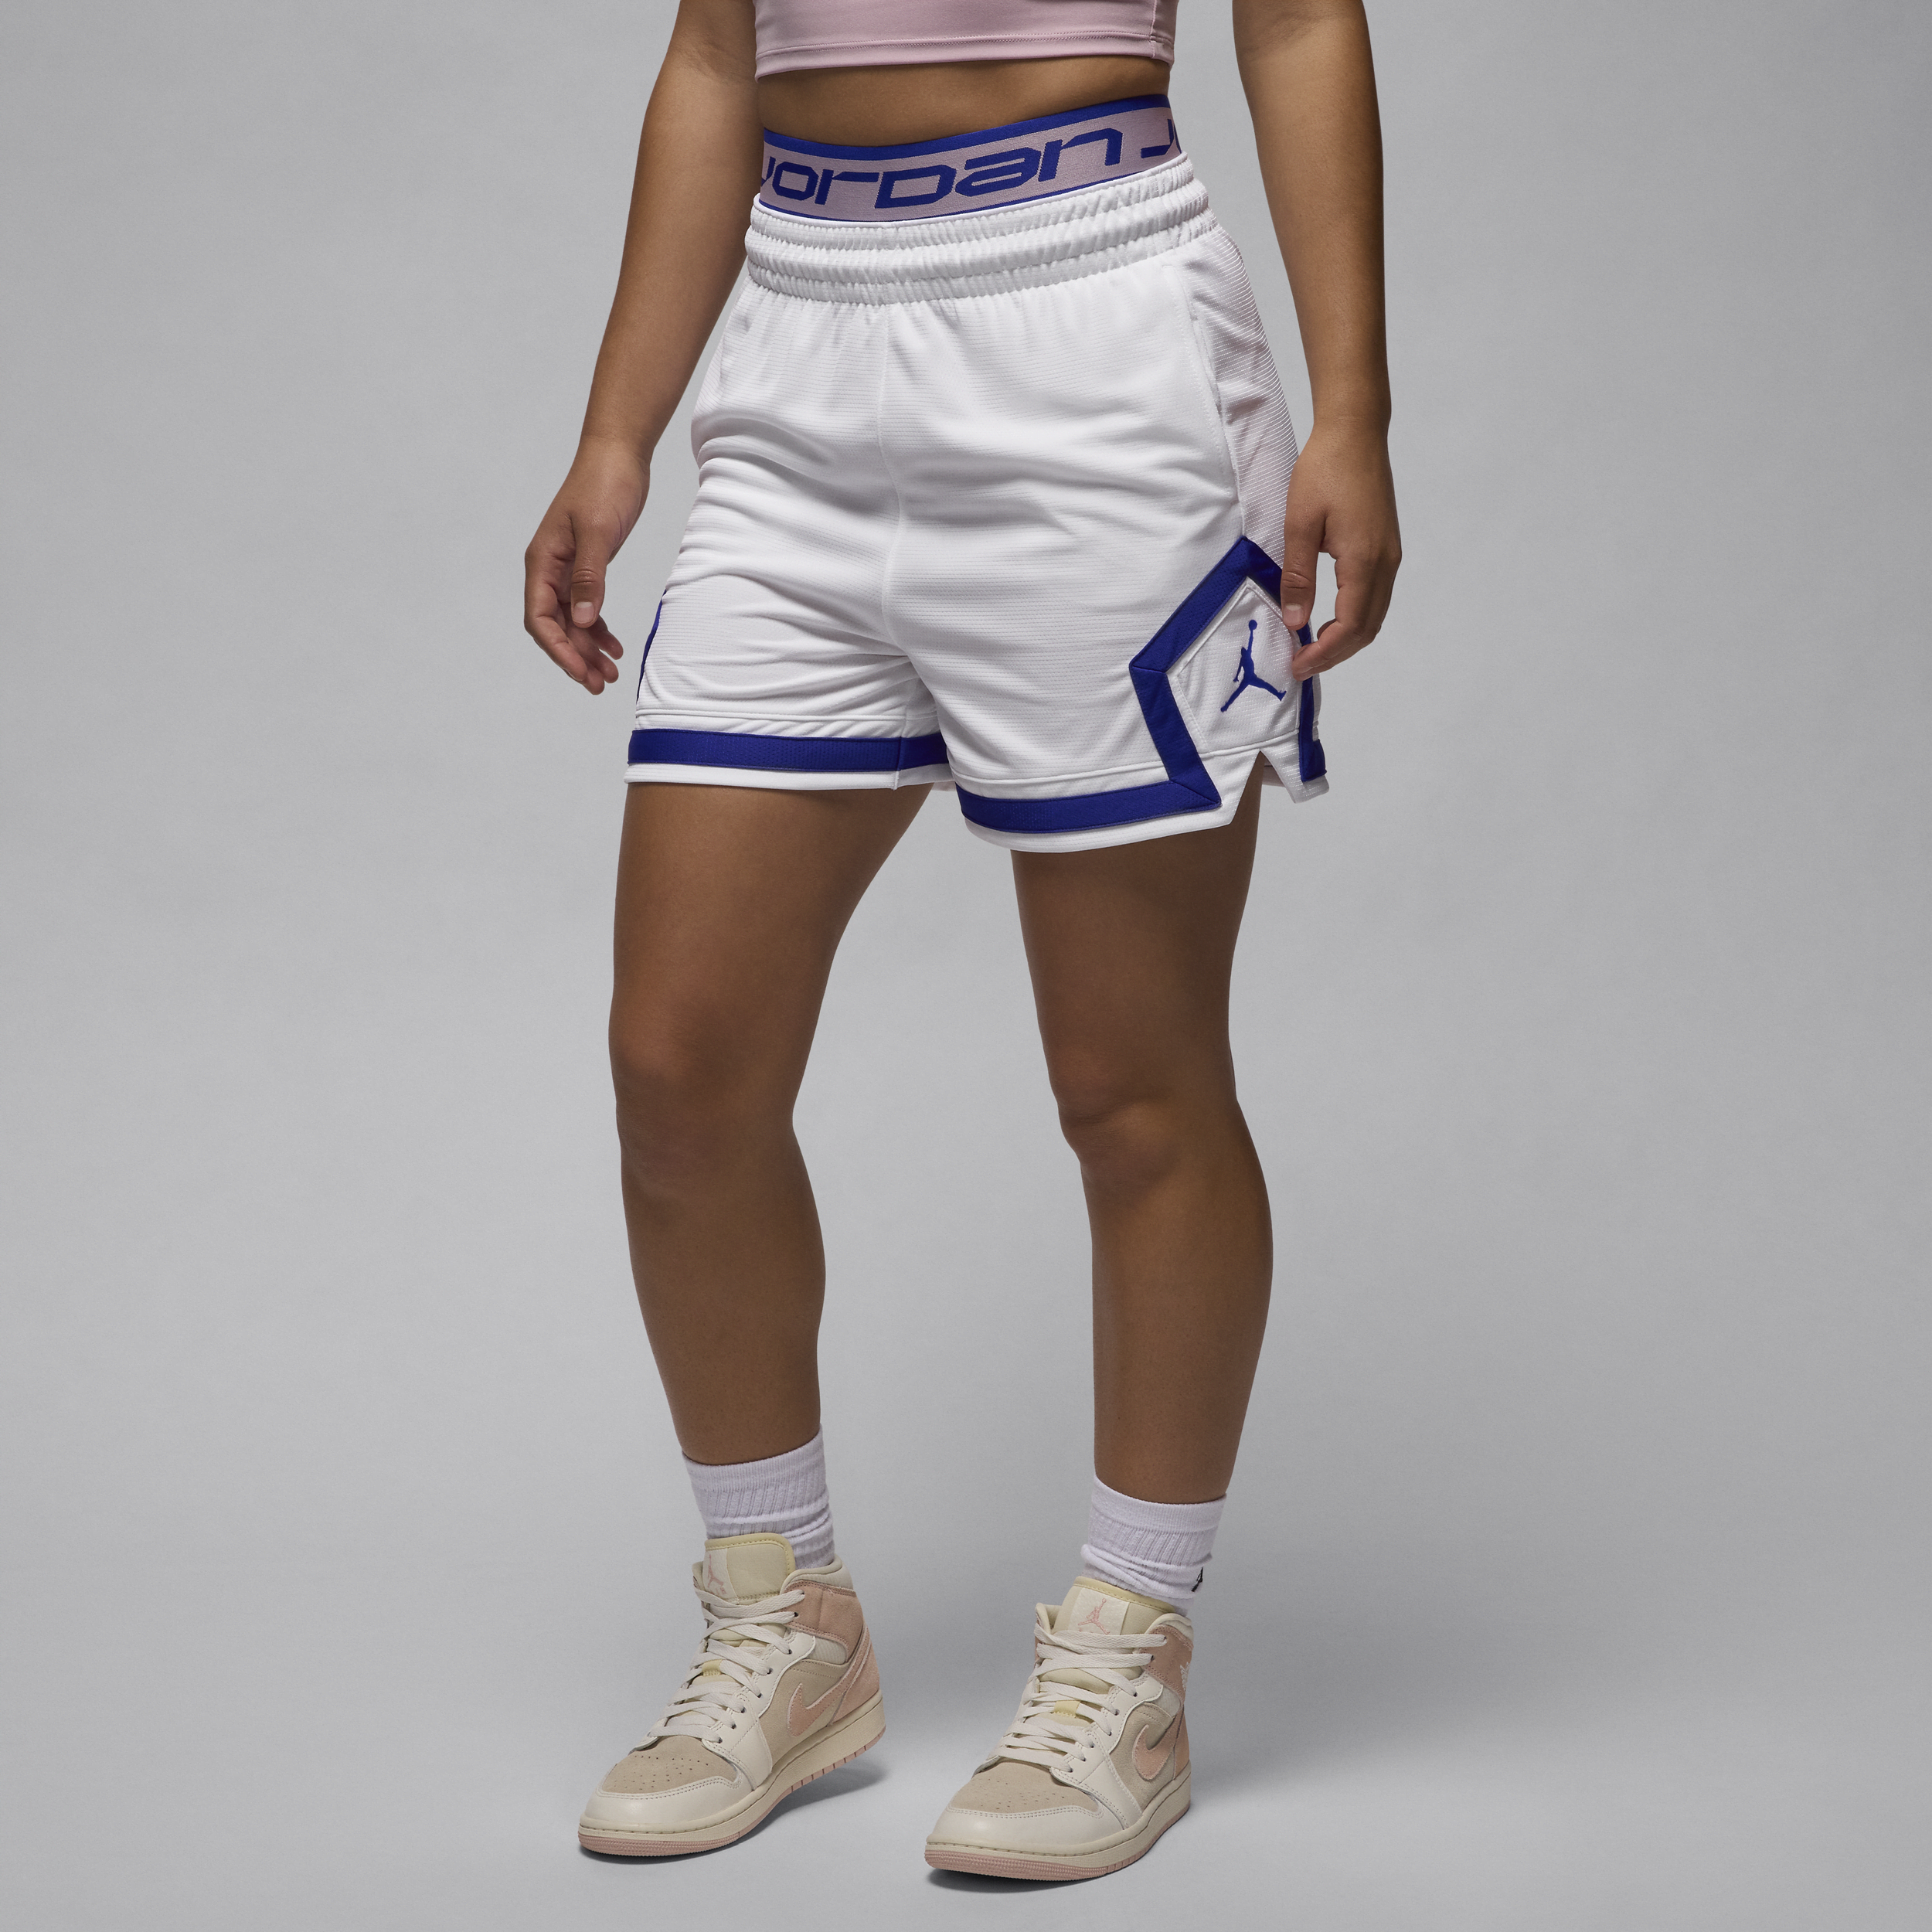 Jordan Sport Pantalón corto de diamante de 10 cm - Mujer - Blanco